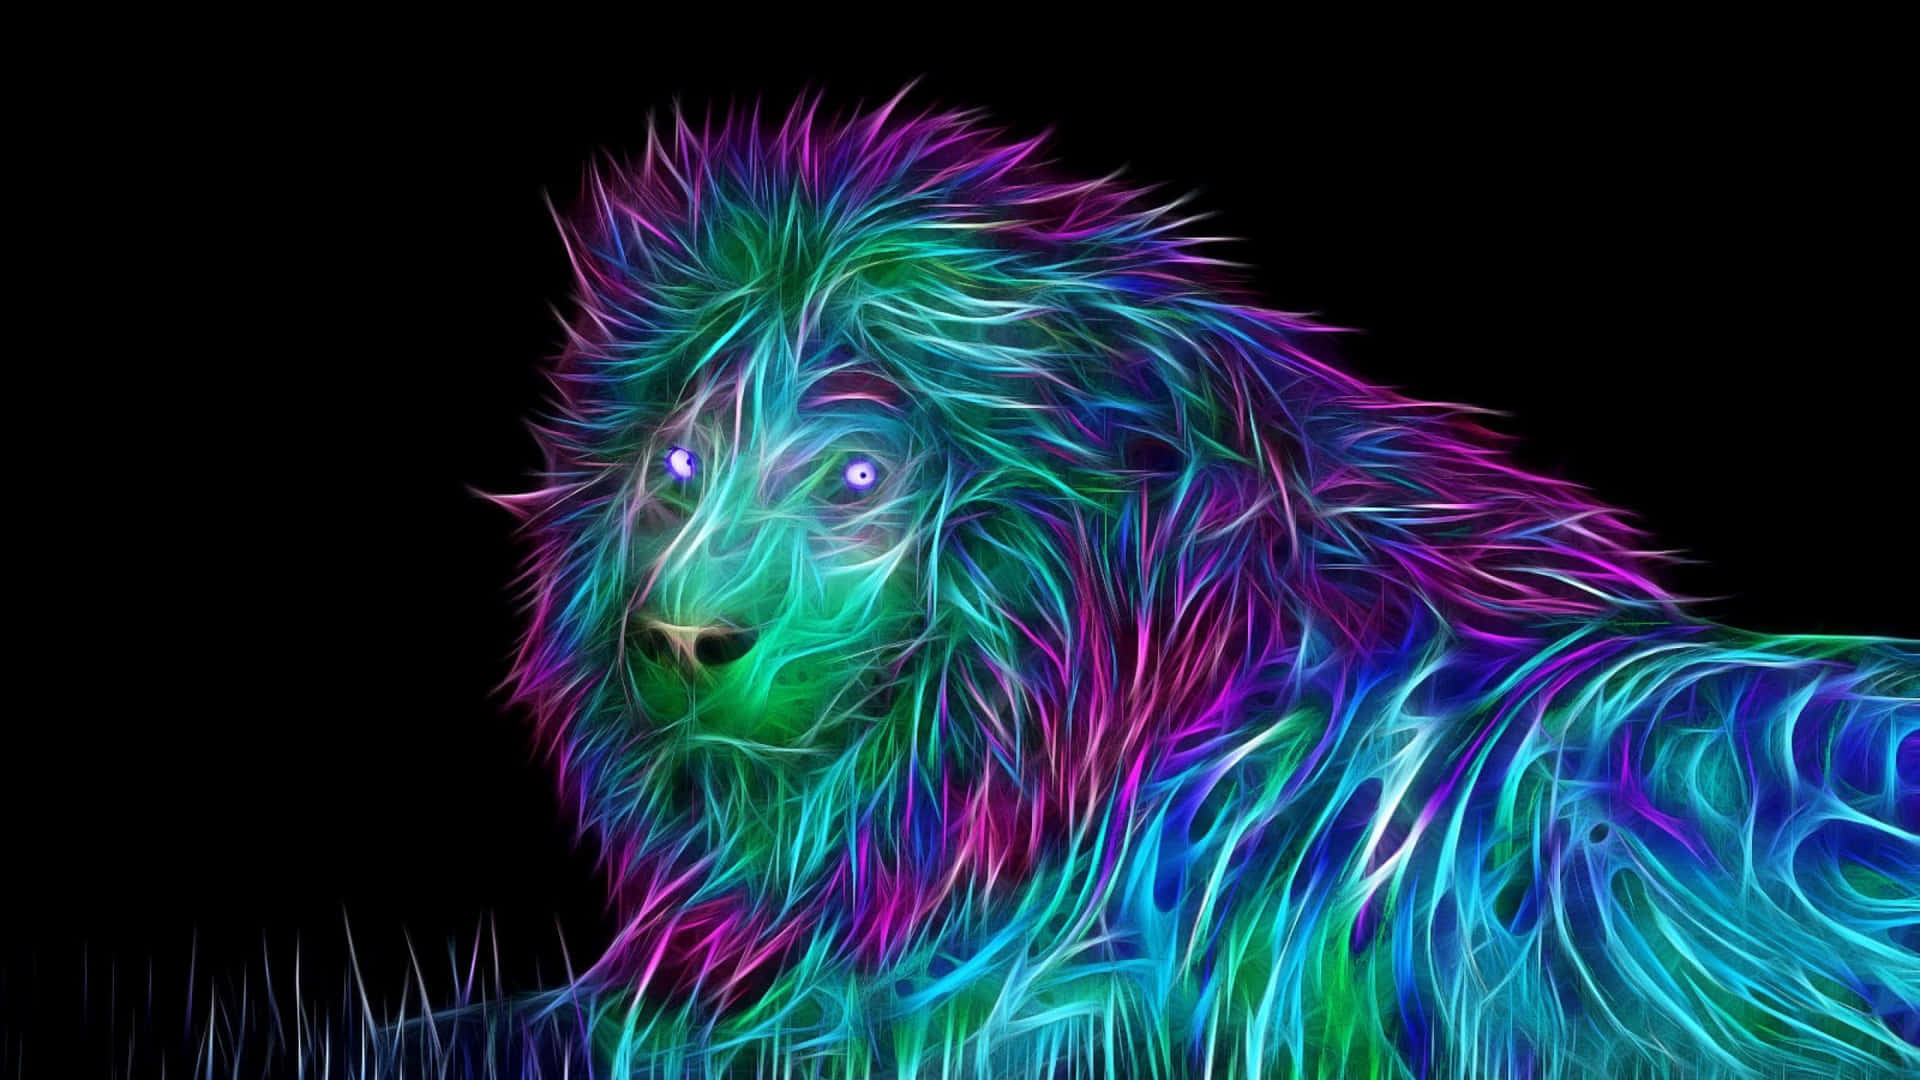 Vibrant Neon Lion Artwork Wallpaper